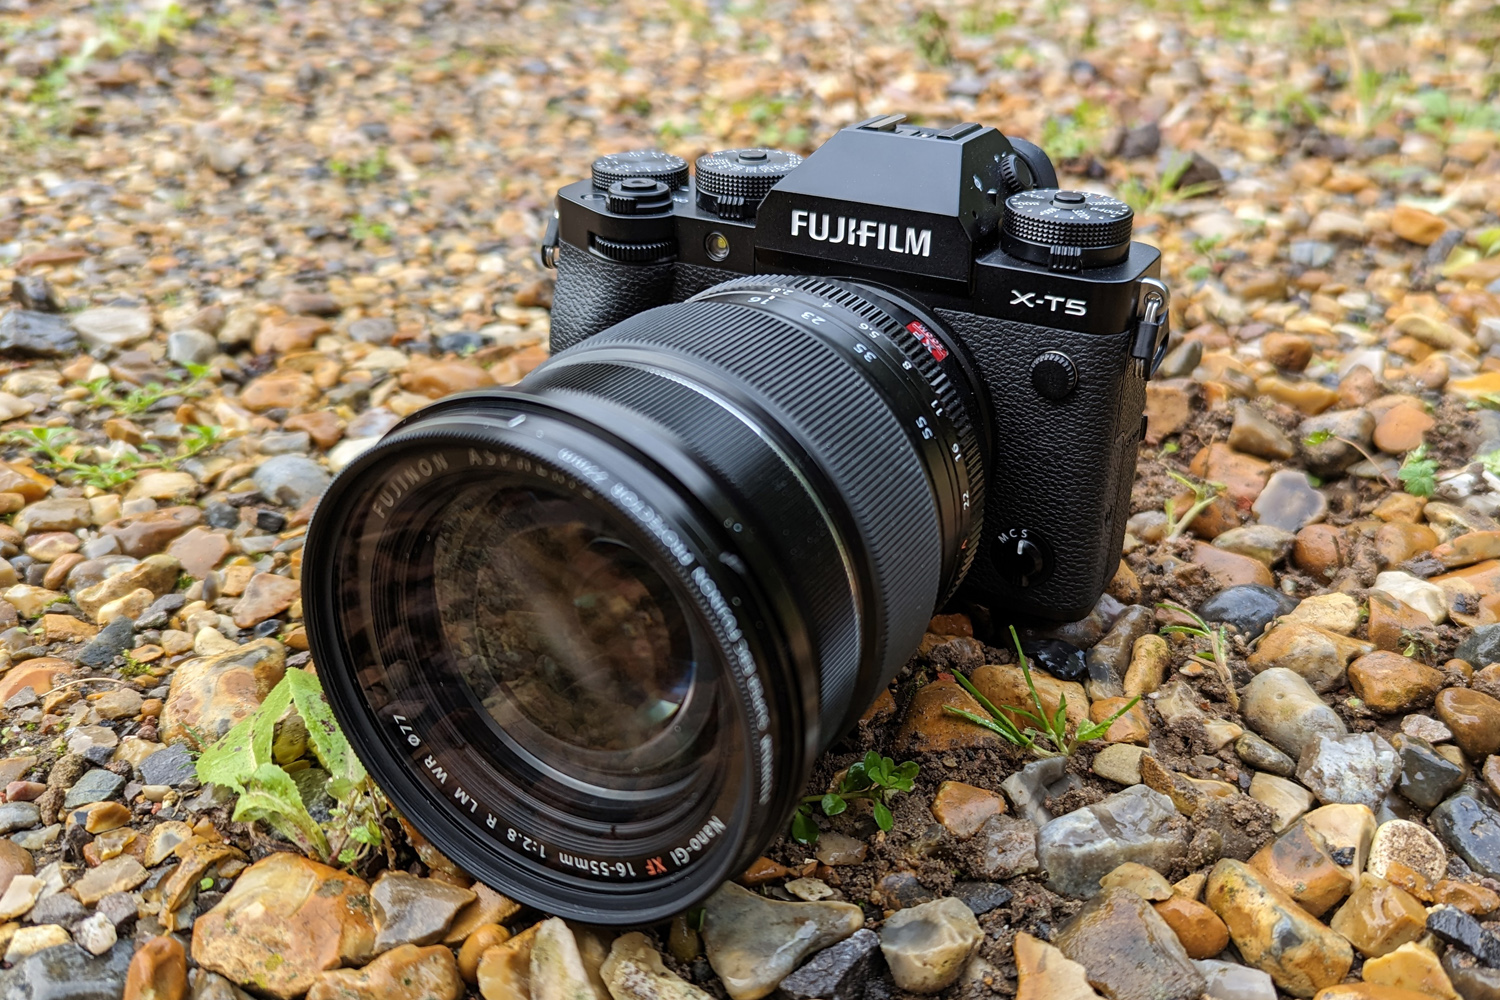 Fujifilm XT5 and XF 16-55mm f/2.8 R LM WR Lens - 2023 Product